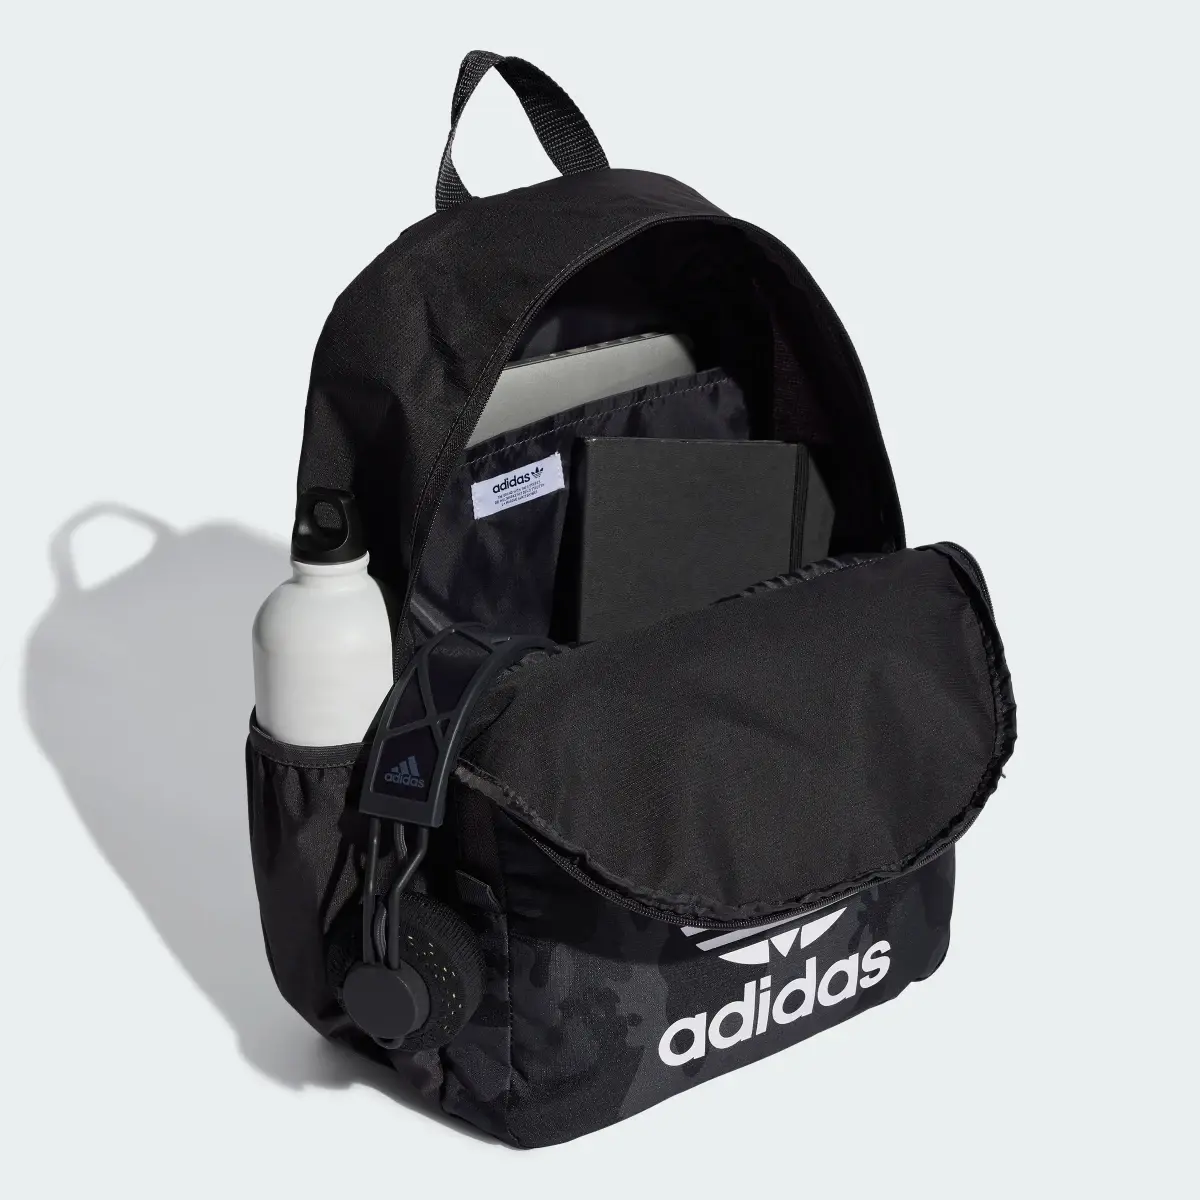 Adidas Camo Graphics Backpack. 3